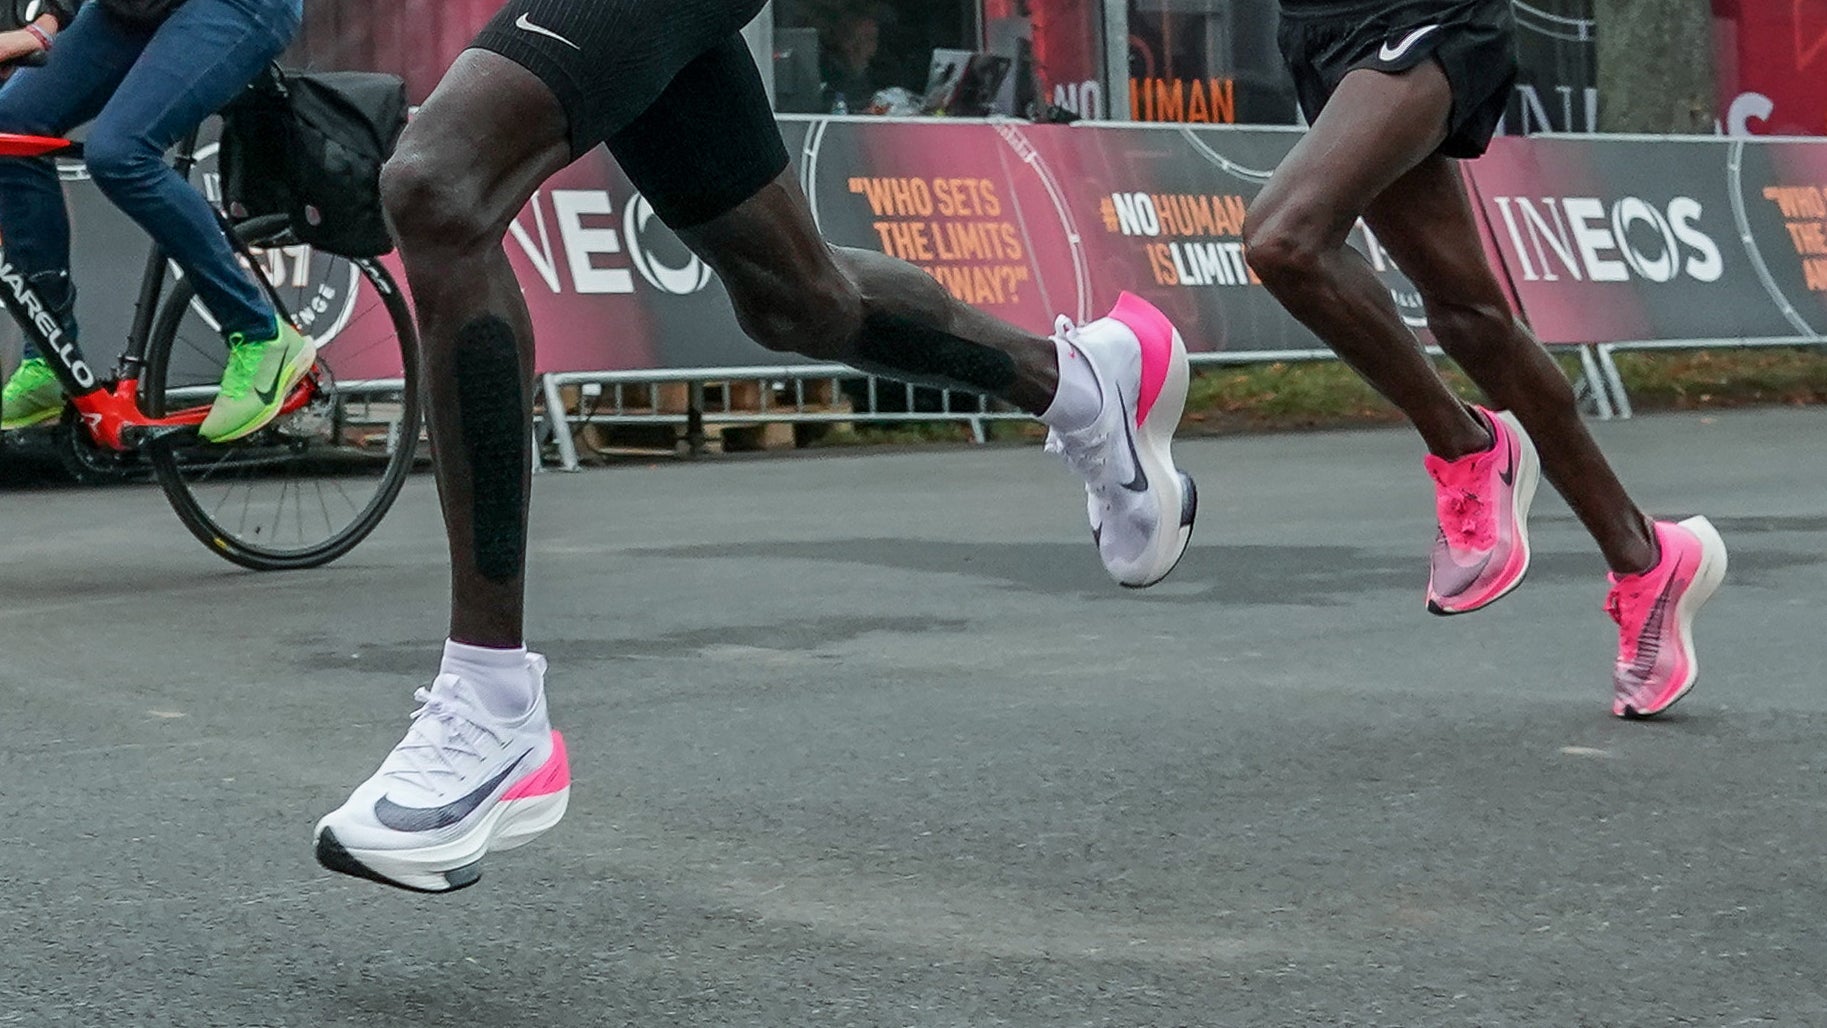 Sensual Nike Alphafly Images Captivate Athletes and Non-Athletes Alike